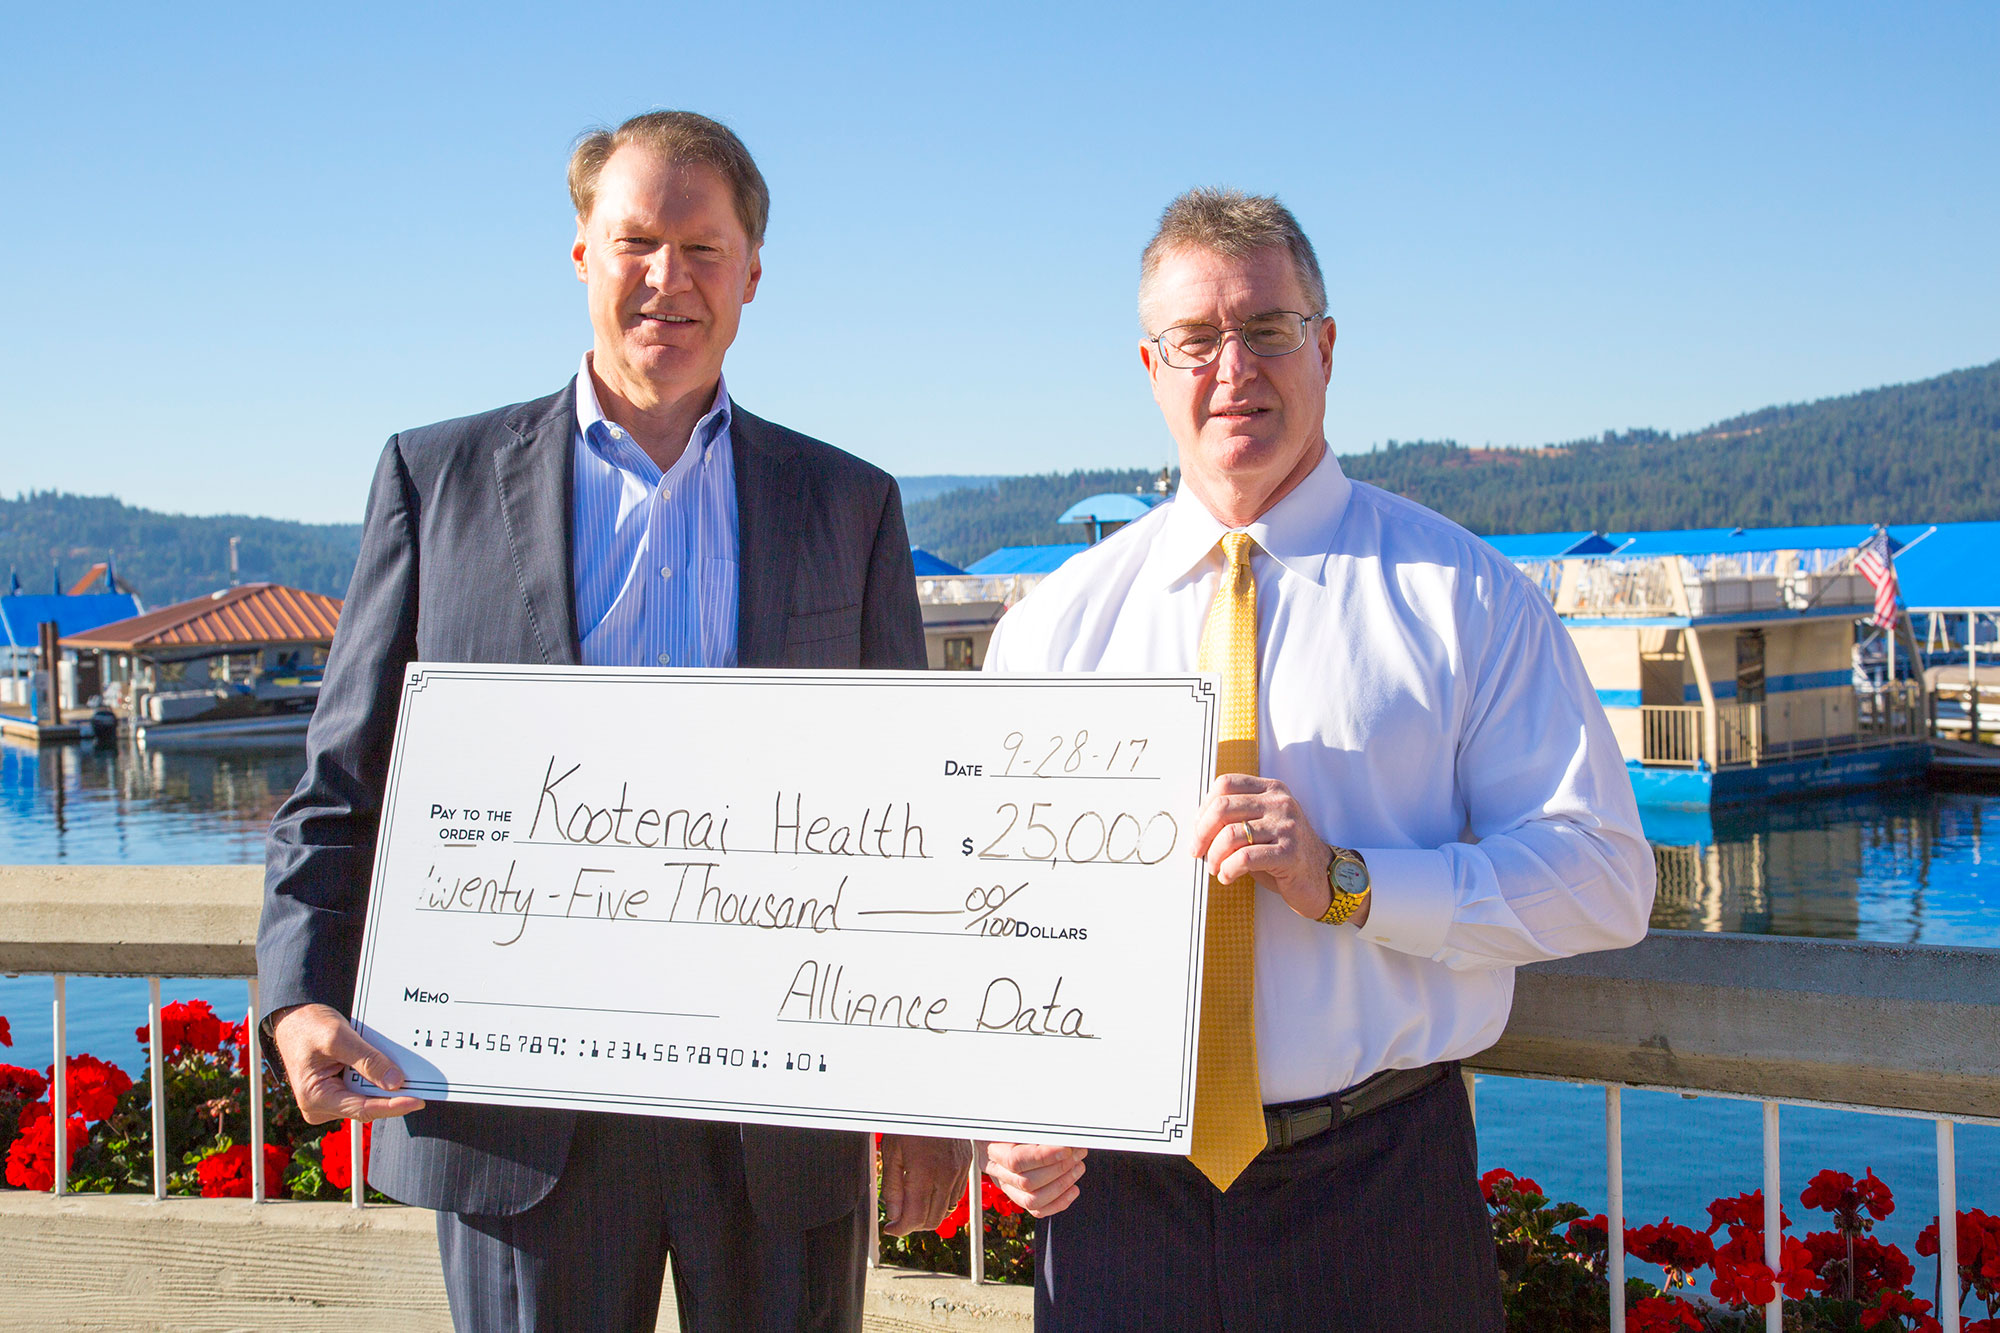 Alliance Data gifts $25,000 to benefit Kootenai Health’s Pediatric Rehabilitation Services